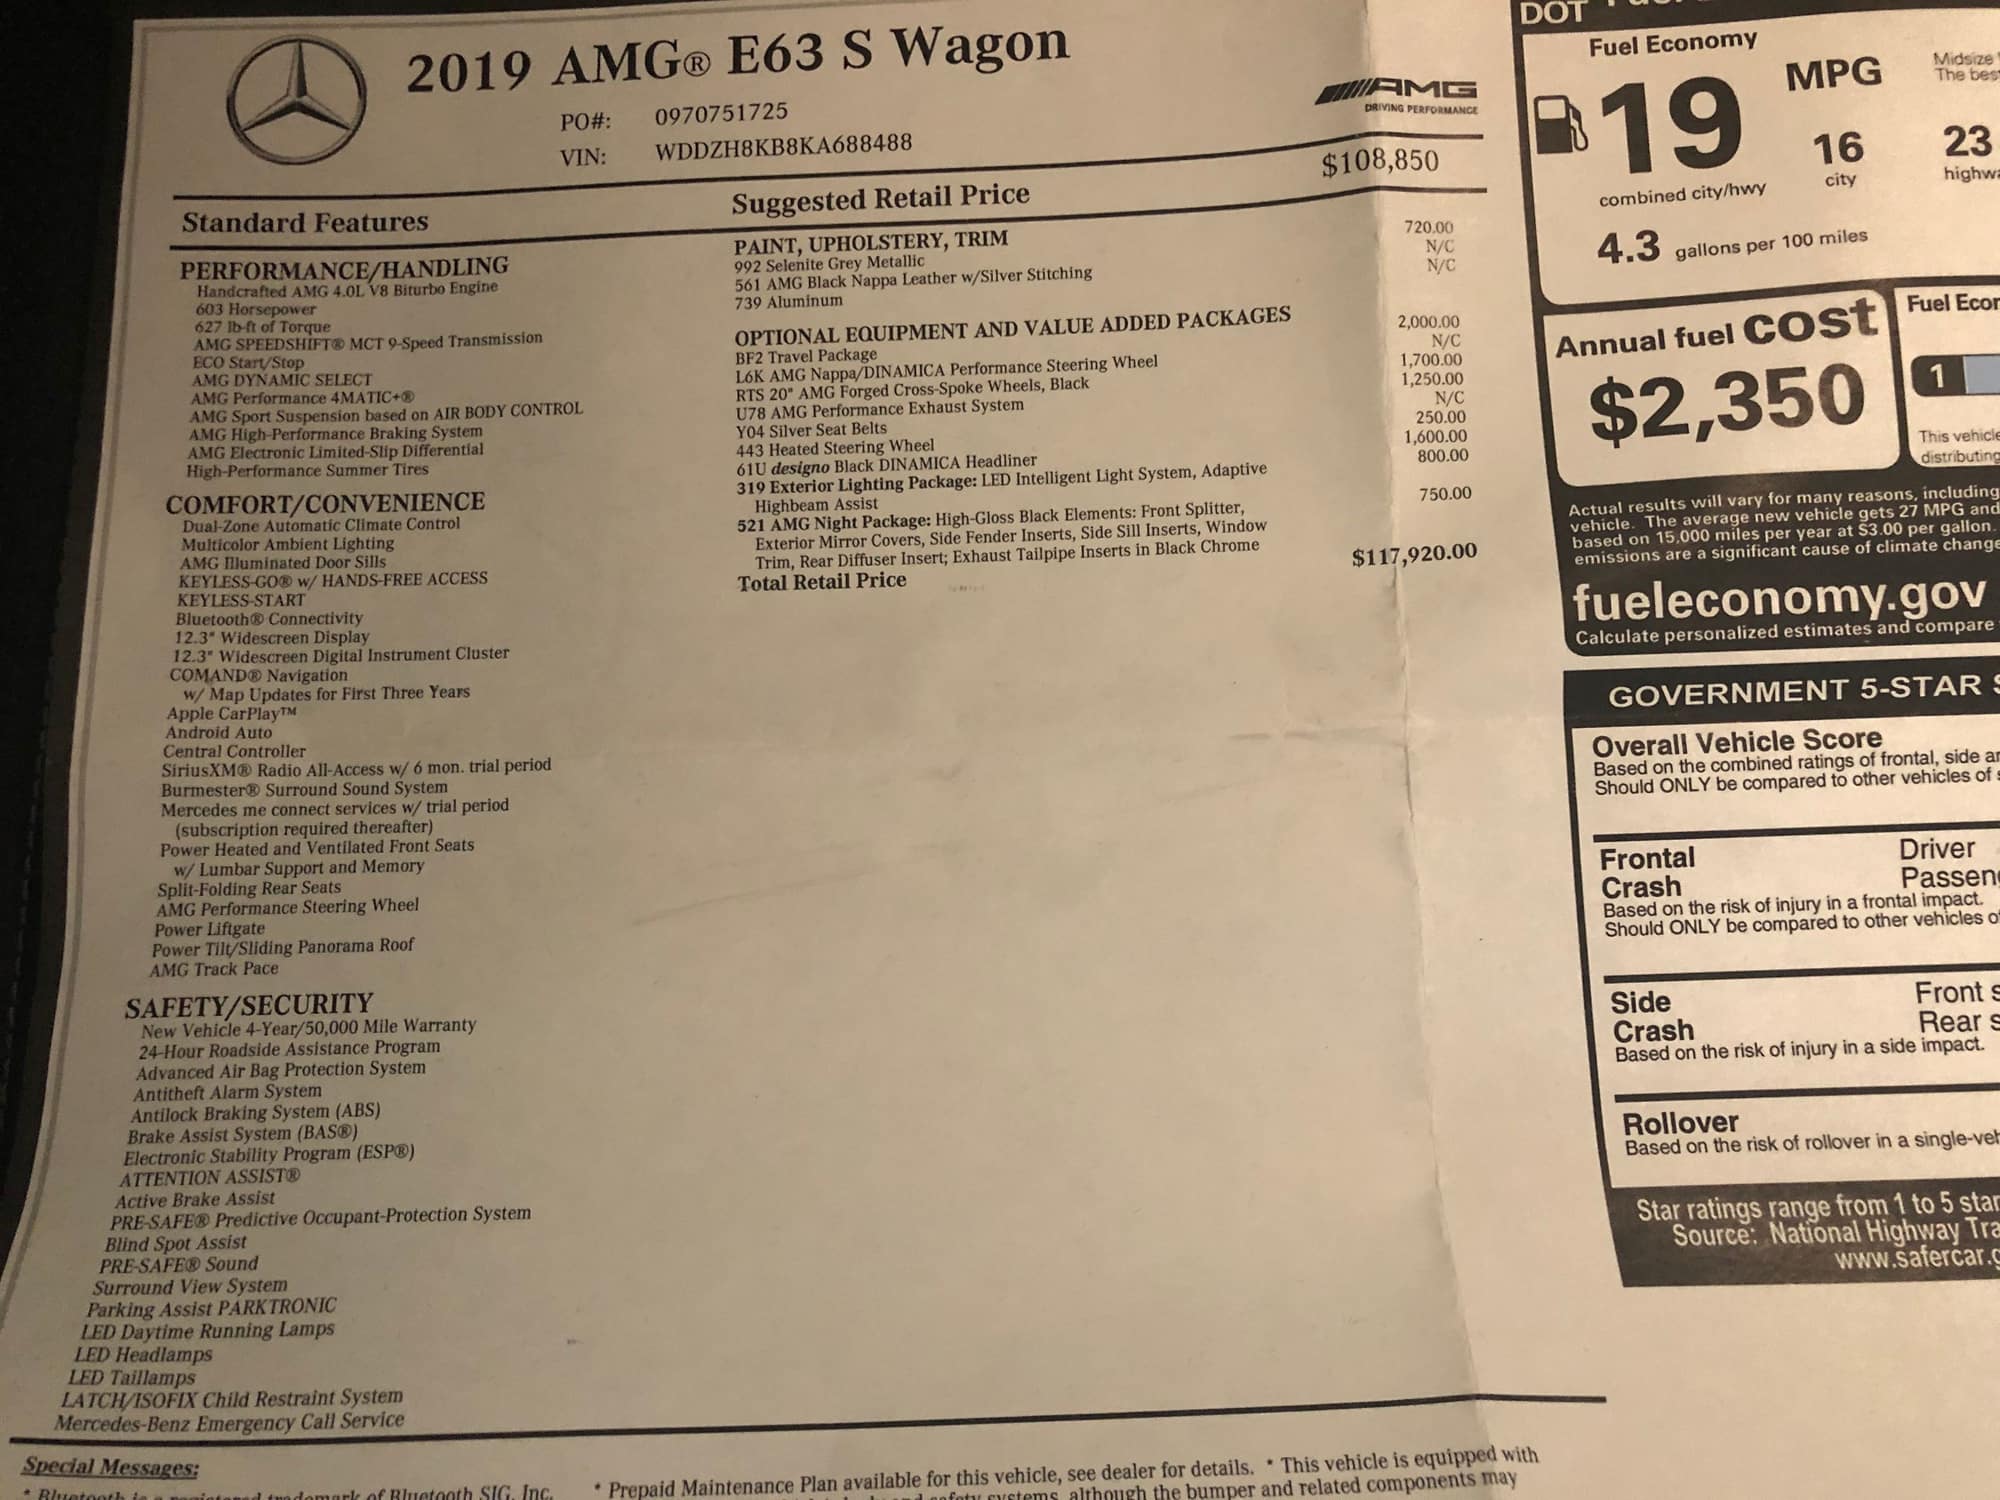 2019 Mercedes-Benz E63 AMG S - 2019 E63S Wagon - Used - VIN wddzh8kb8ka688488 - 5,500 Miles - 8 cyl - AWD - Automatic - Wagon - Gray - Frisco, TX 75036, United States